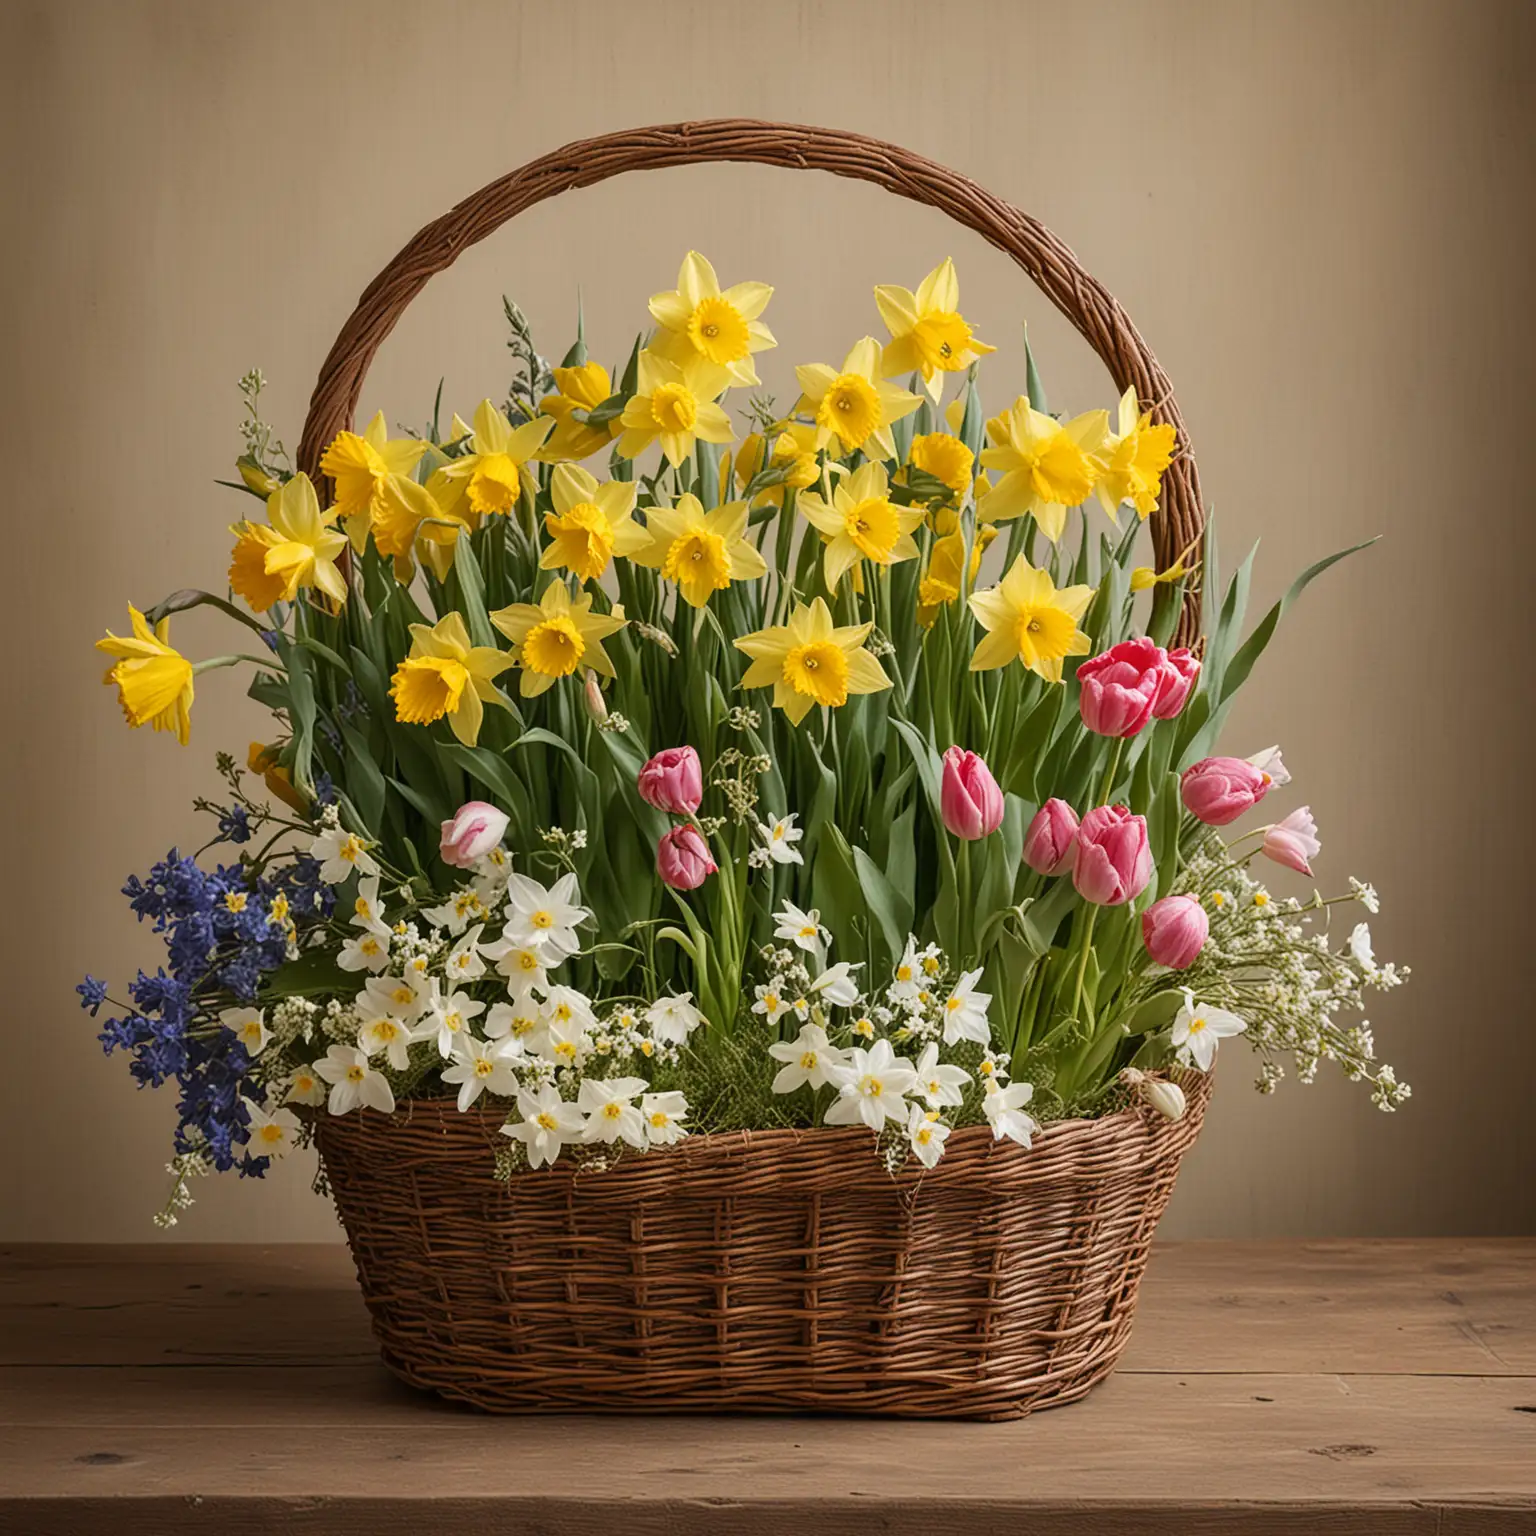 Spring-Flowers-in-Wicker-Basket-on-Cream-Background